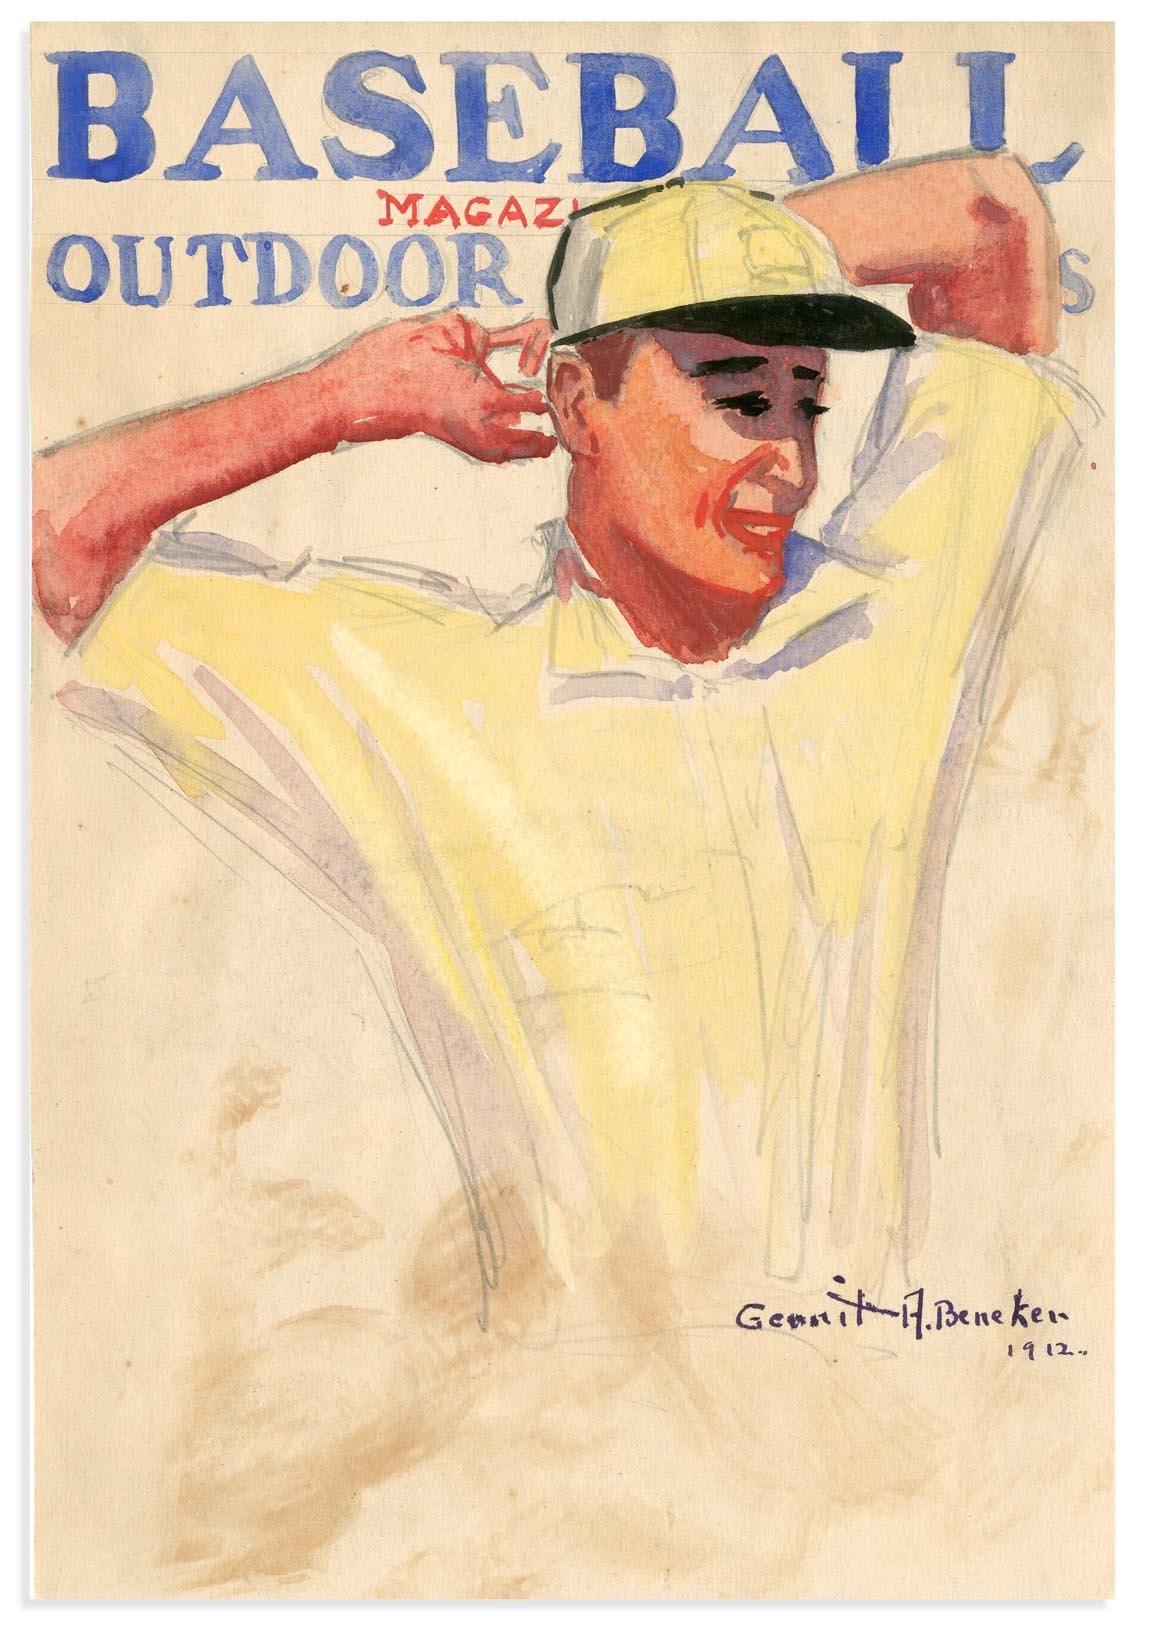 1912/1925 "World Series Number" Baseball Magazine Cover Art Study by Gerrit Beneker (1882-1934)